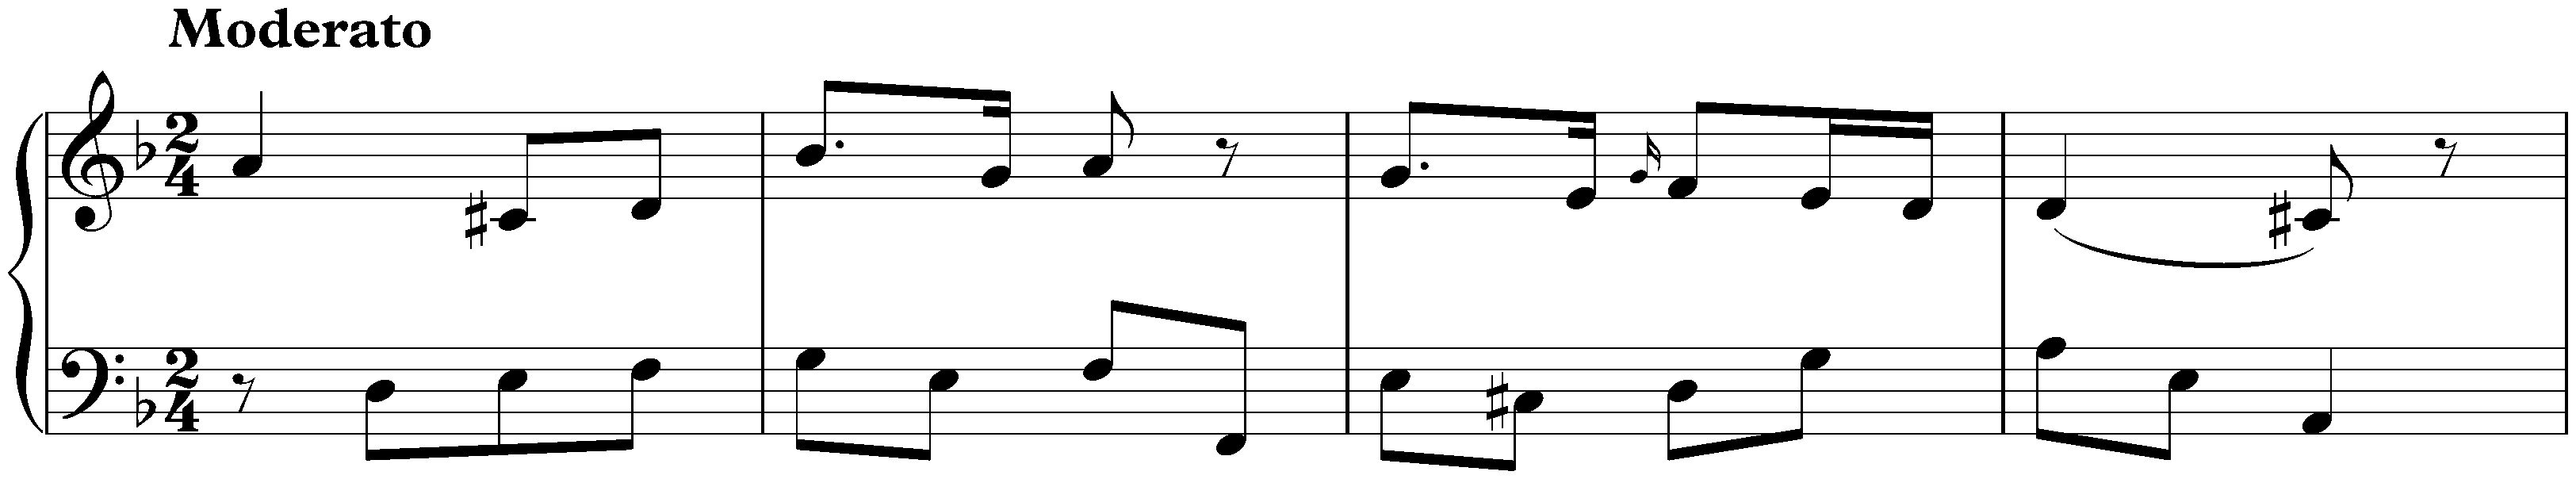 Incipits of lost works; 1. Sonata in D minor, Hob. XVI:2a, Landon 21